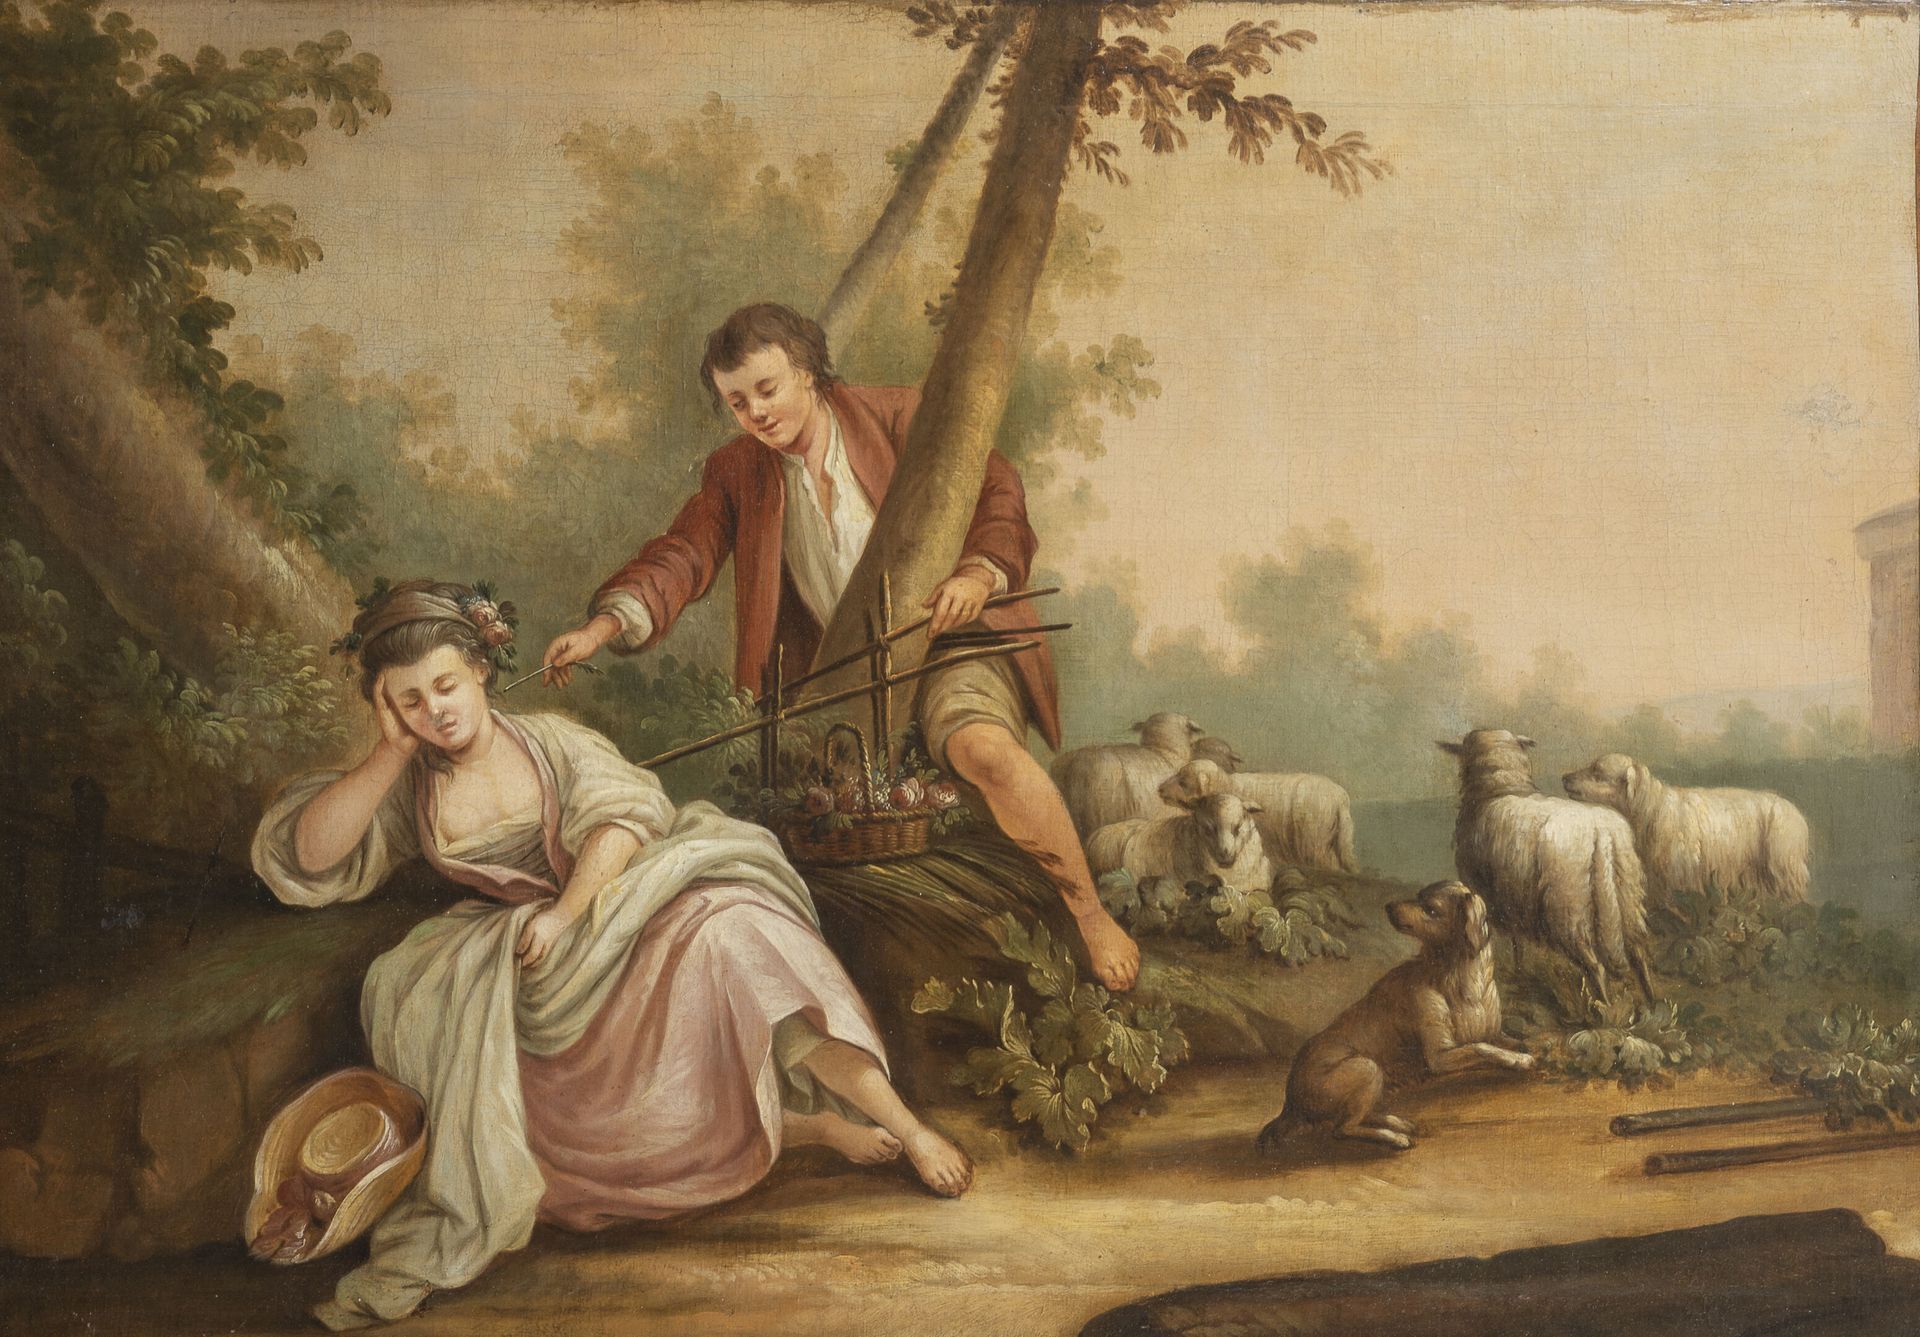 Ecole dans le goût du XVIIIème siècle Shepherd tickling a drowsy young woman.

O&hellip;